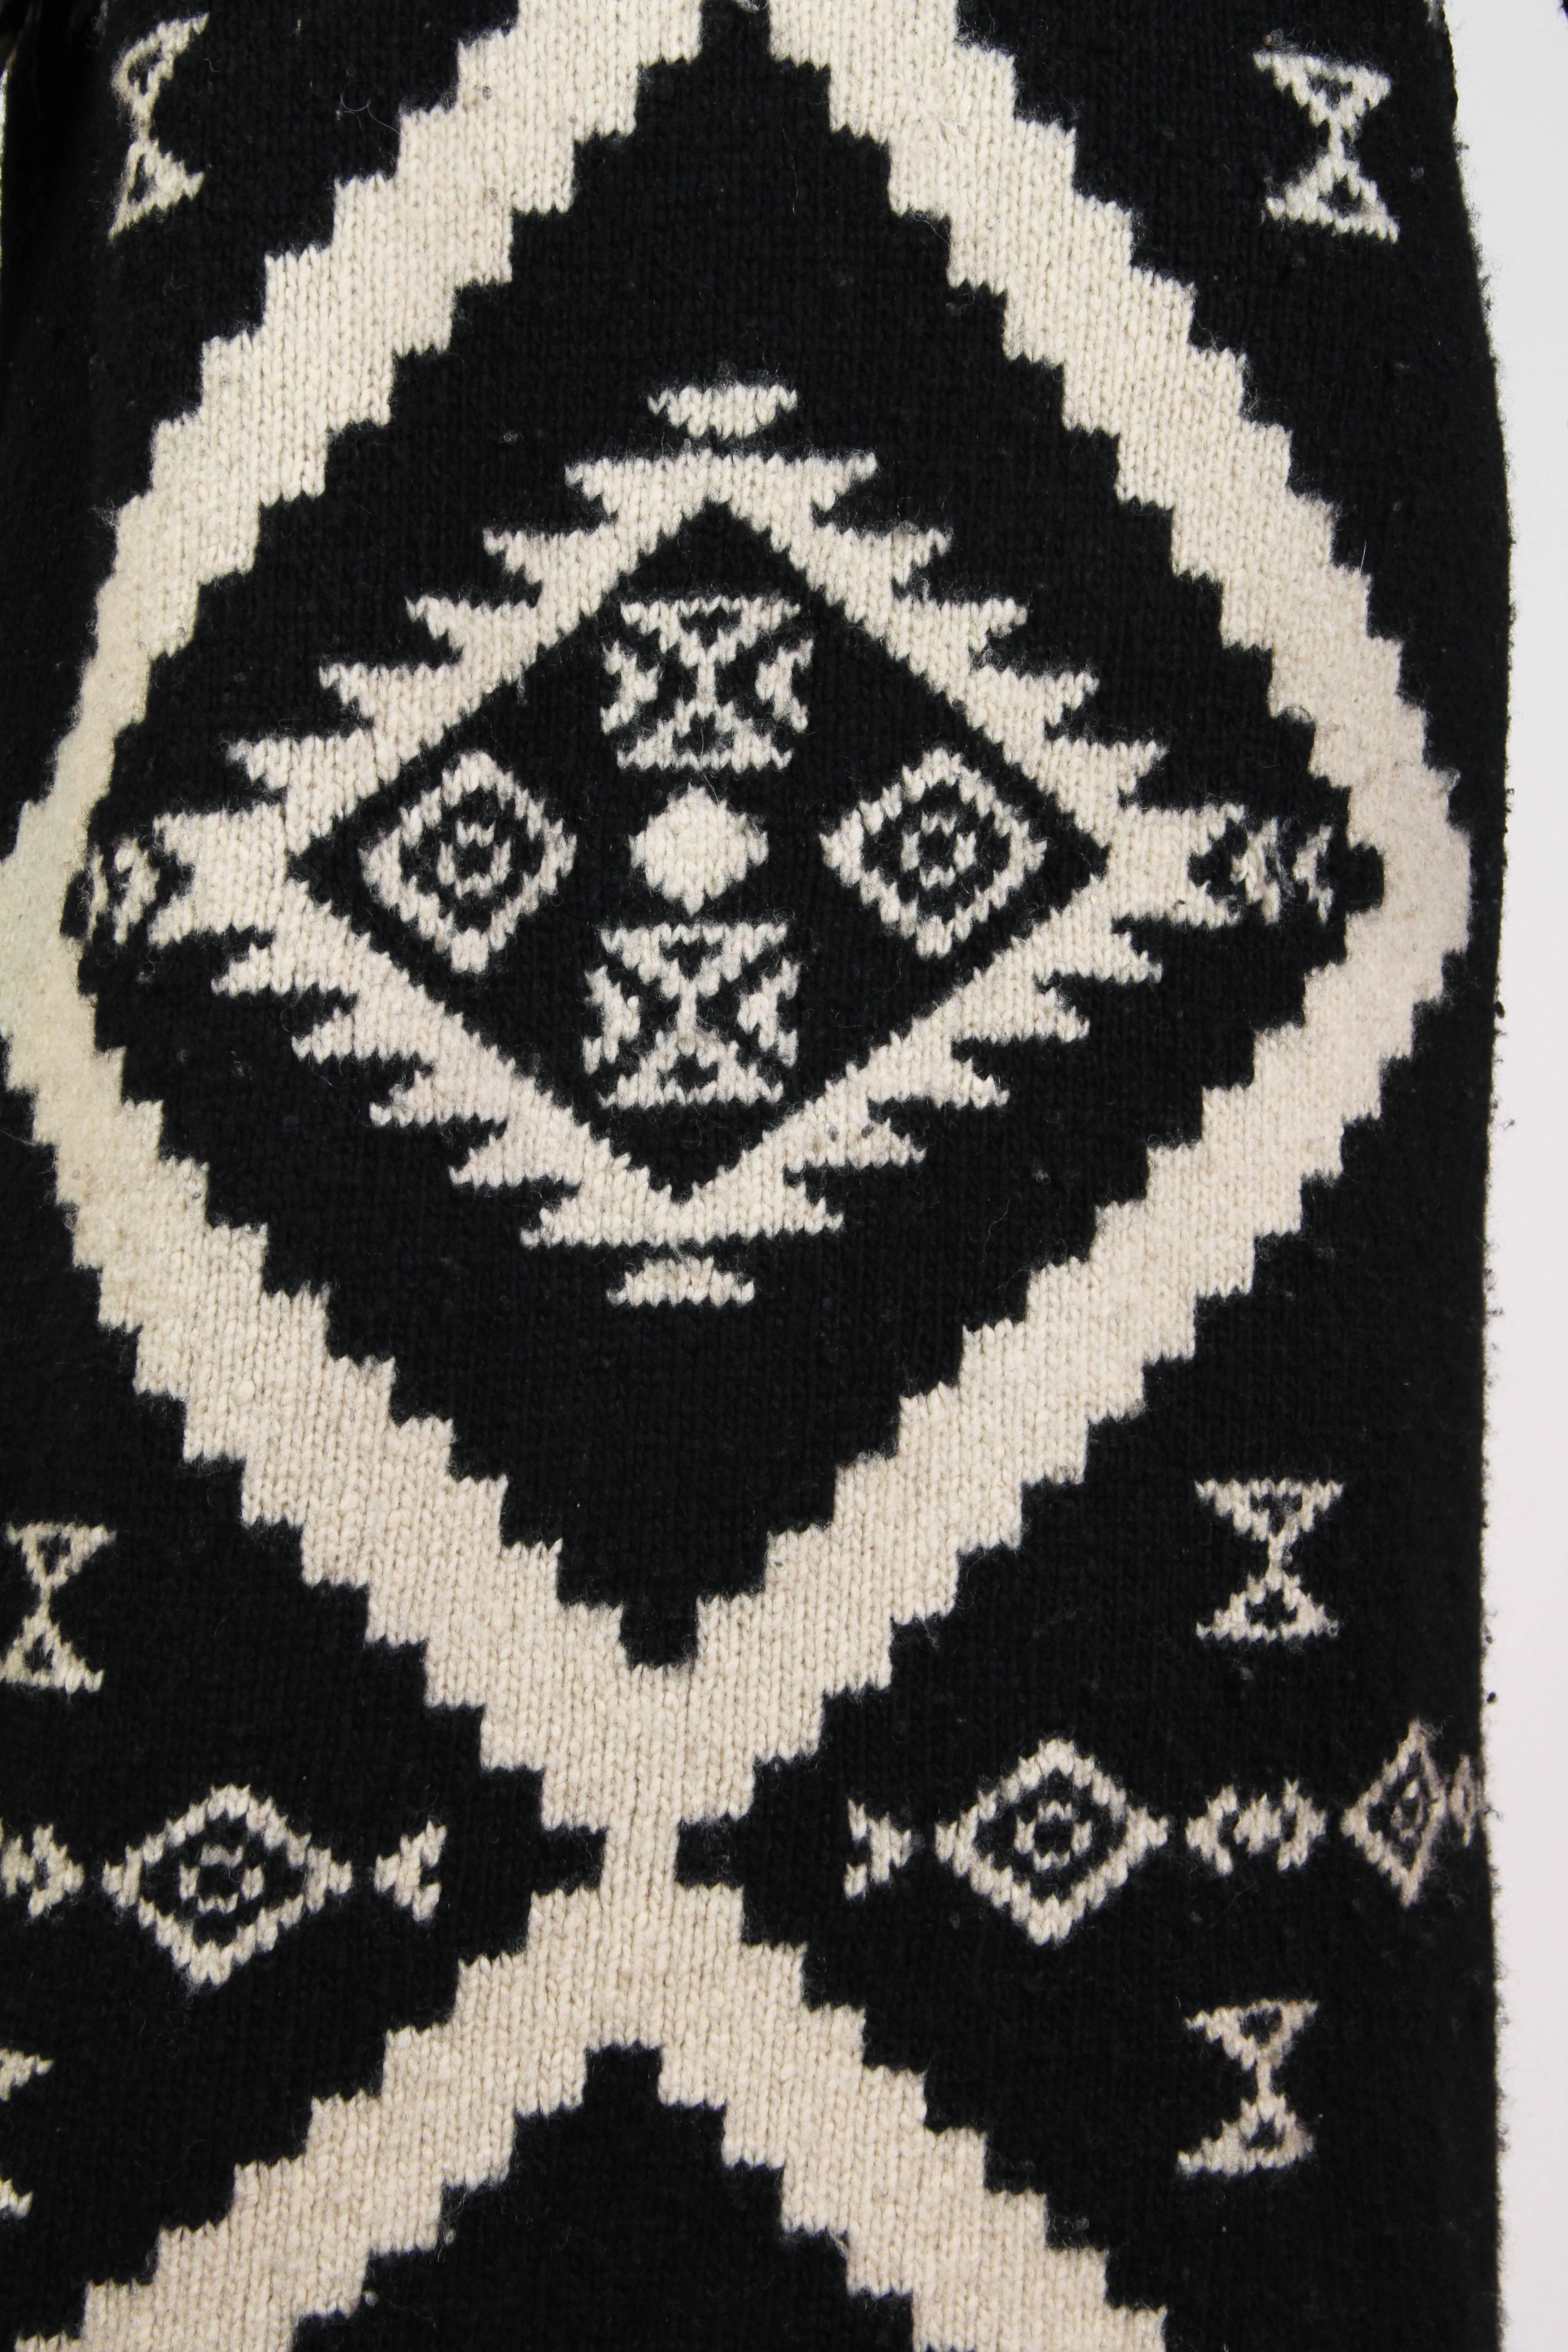 Ralph Lauren Native American inspired Sweater 1